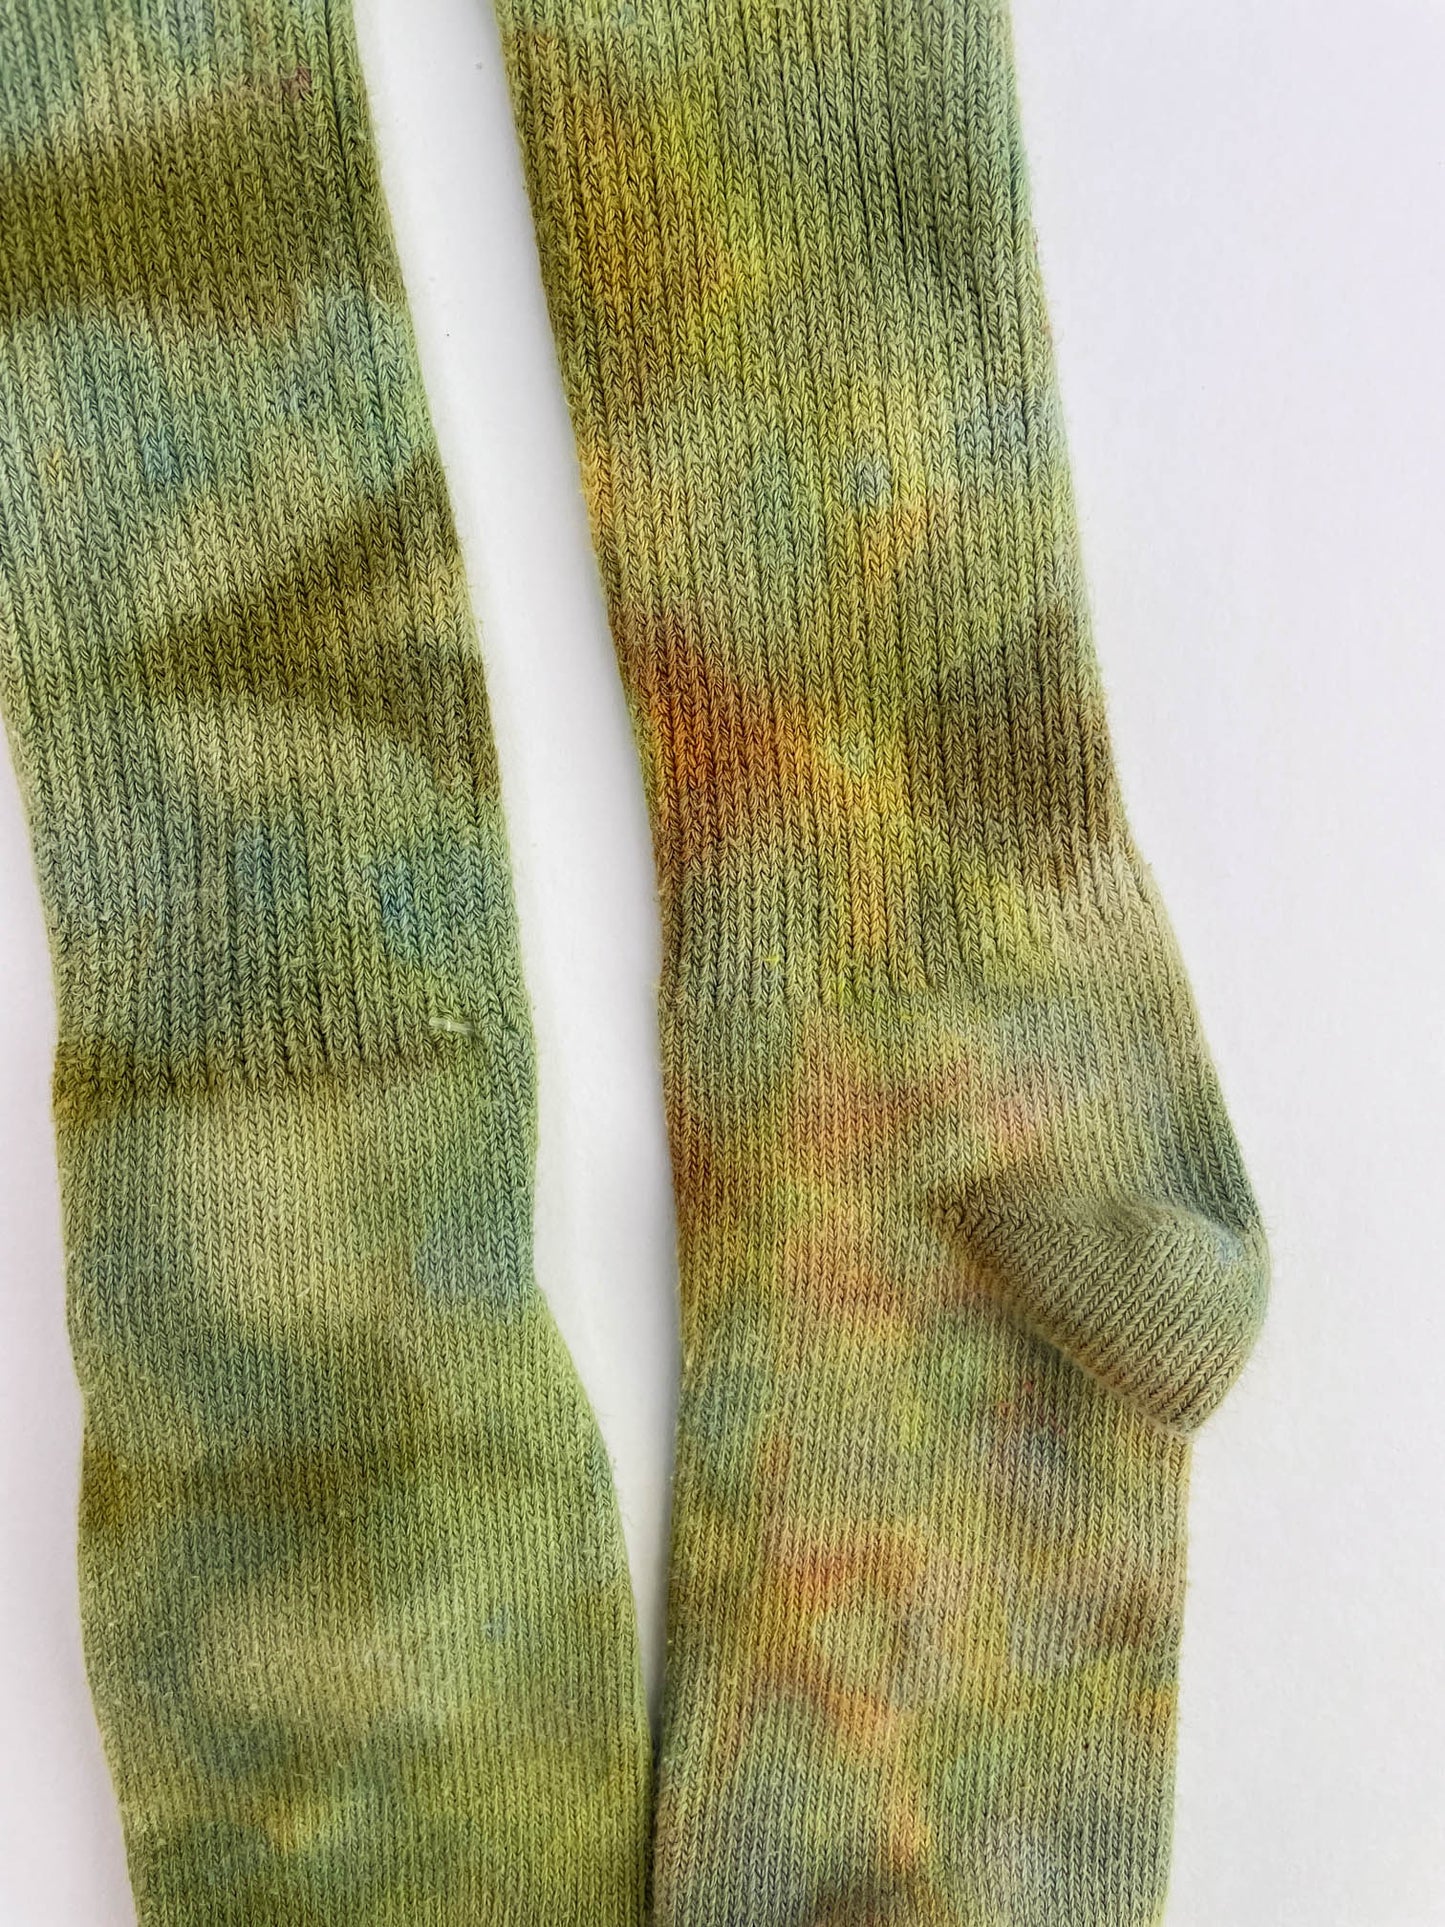 Forest Organic Cotton Crew Socks - Small - 1